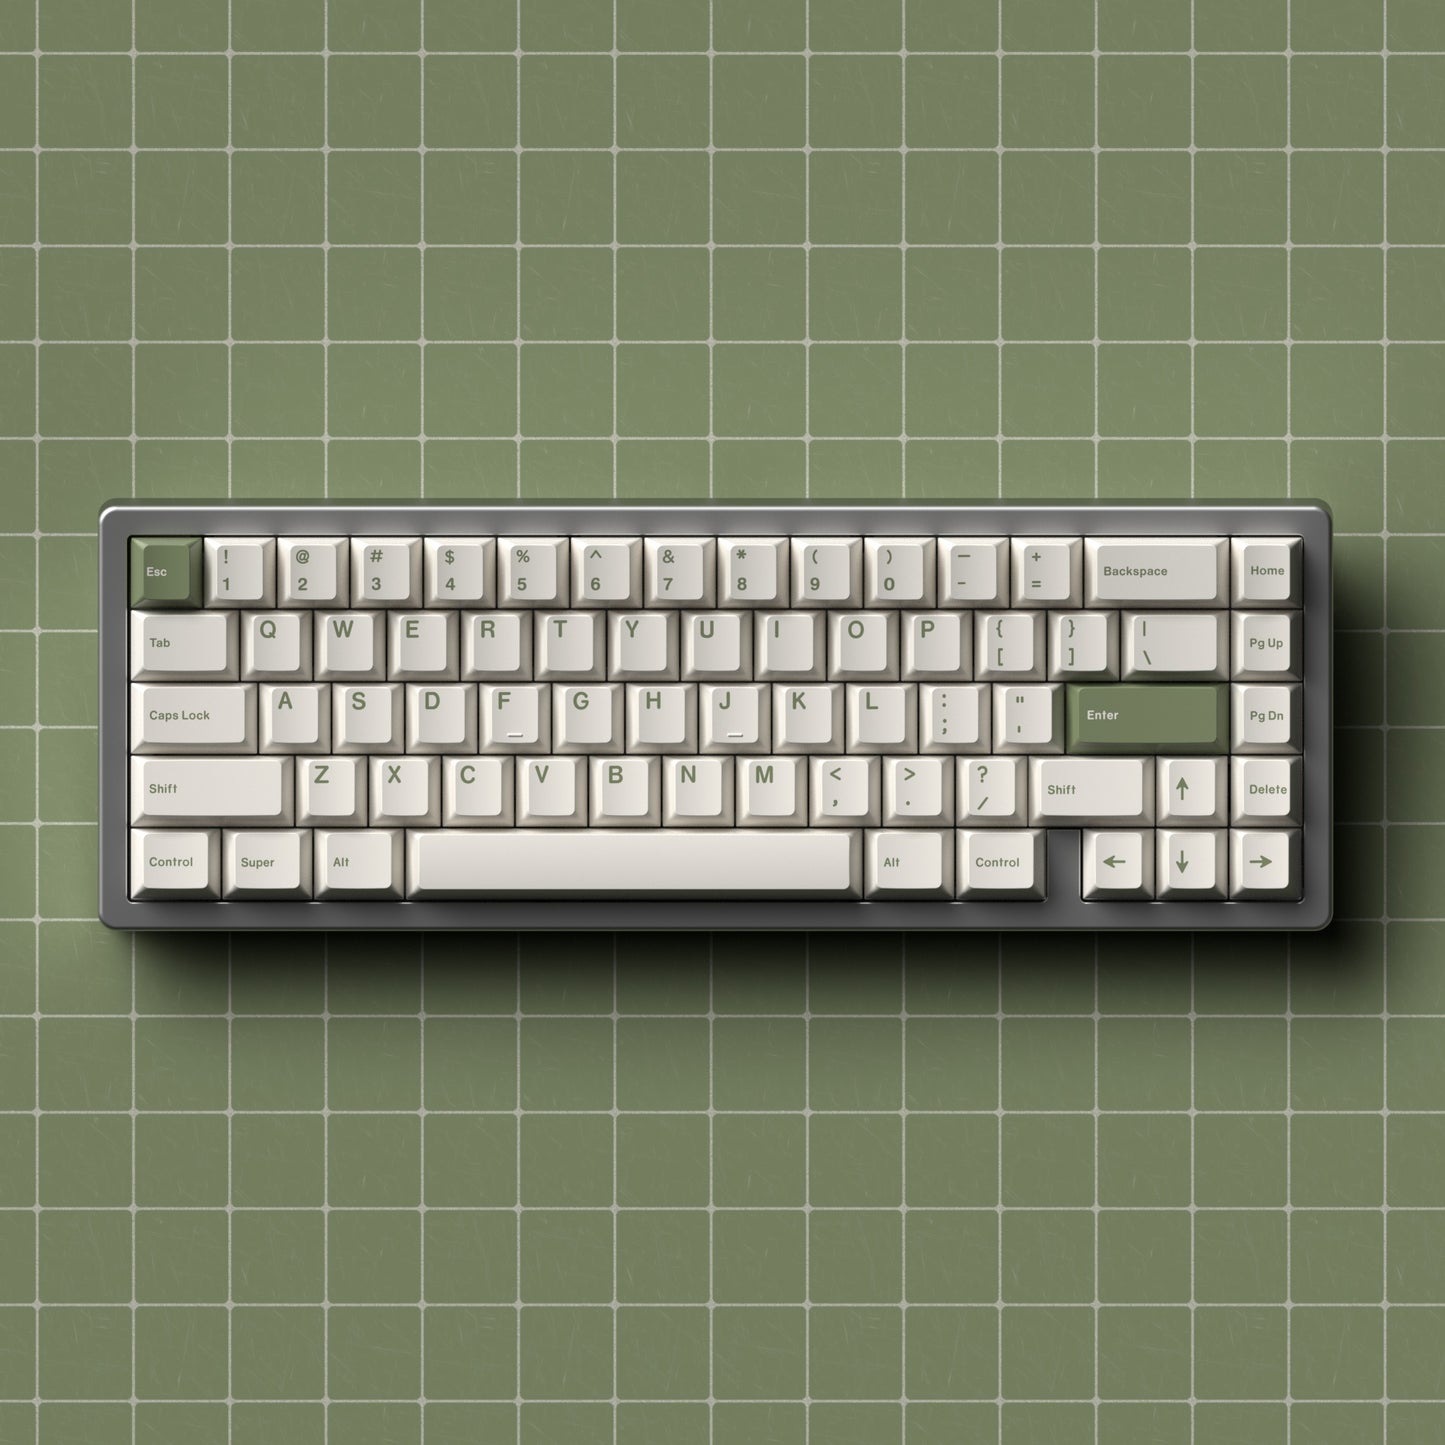 Minimalist Color on White Keycap Set, Cherry Profile, Dye Sub PBT Key Cap